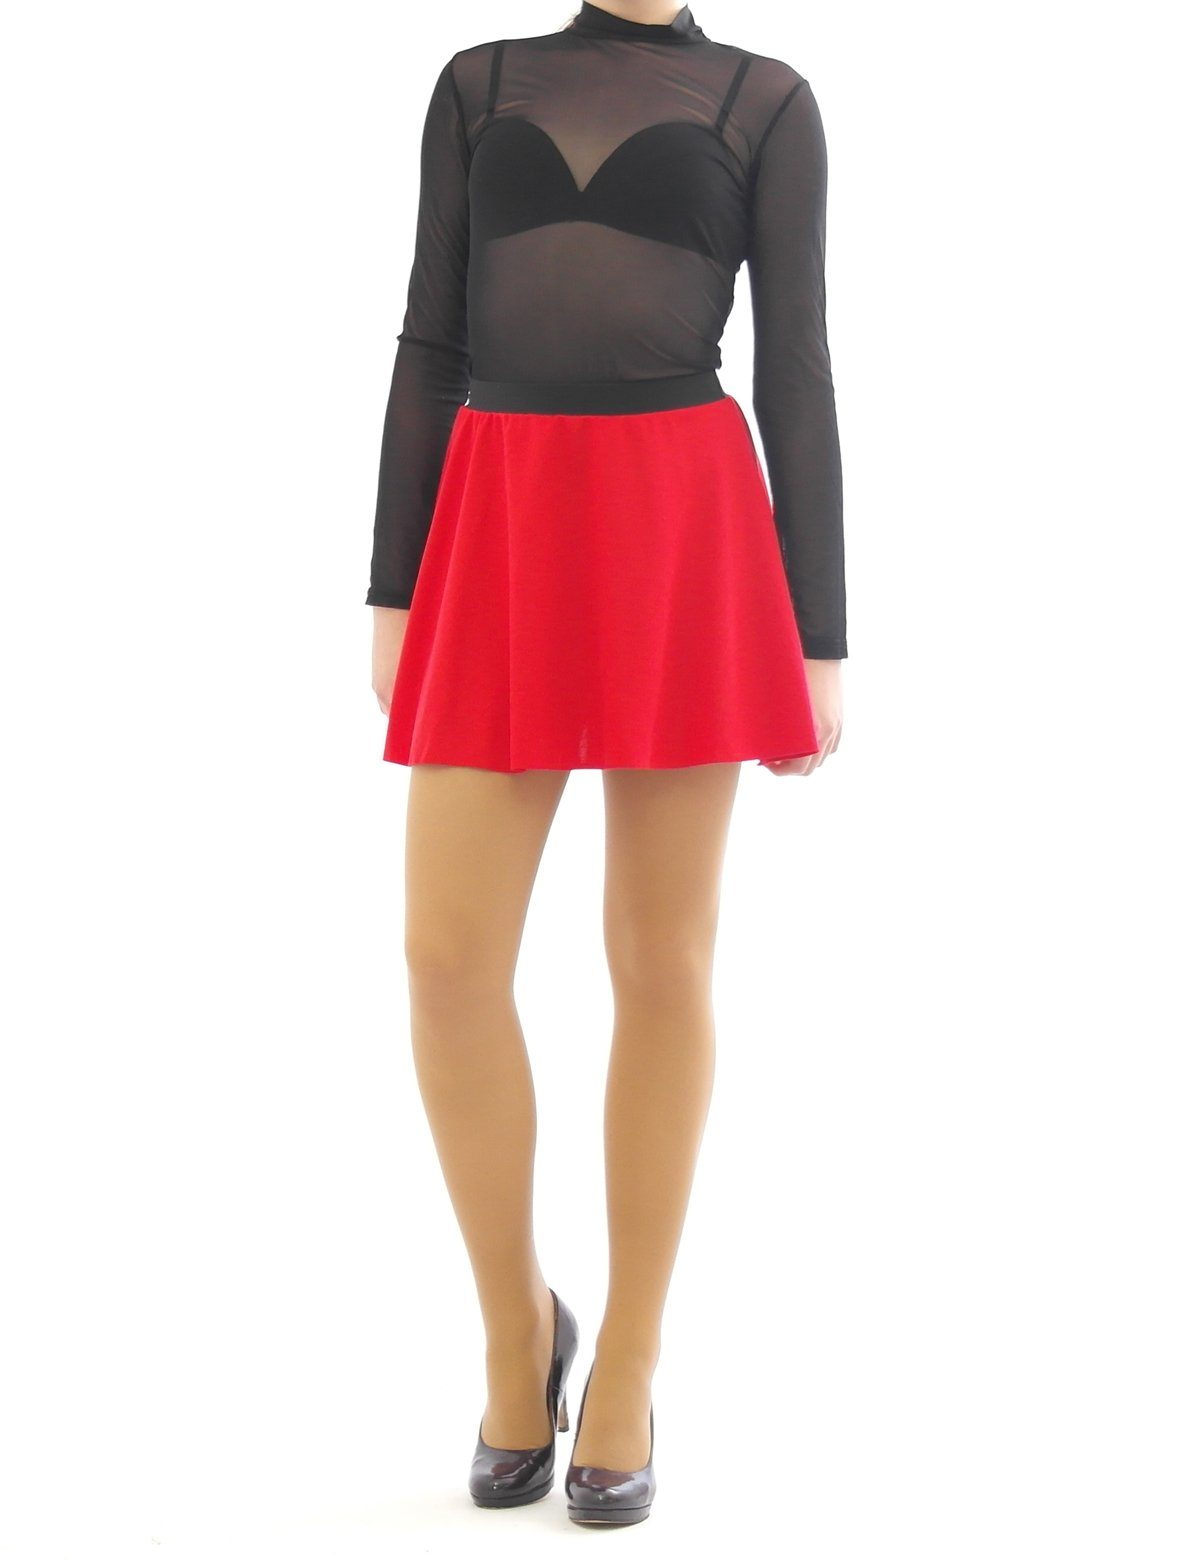 Minirock hohe Swing Falten-Rock rot Skirt Mini Rock Gummibund Minirock SYS Taille